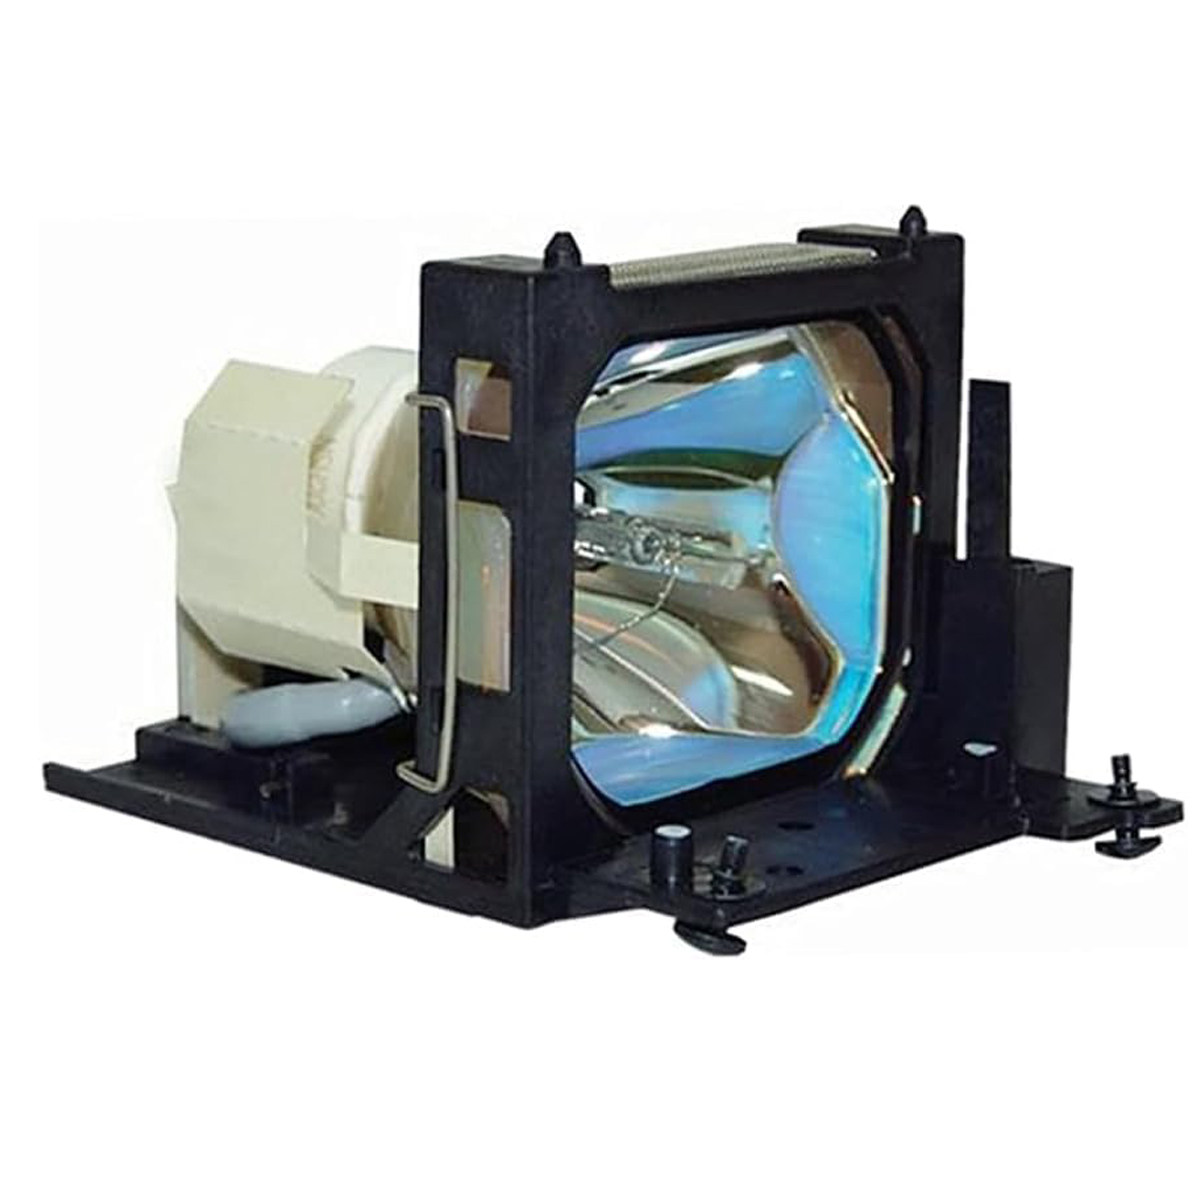 Replacement Projector lamp RLC-001 For VIEWSONIC PJ402D PJ750-2 PJ750-3